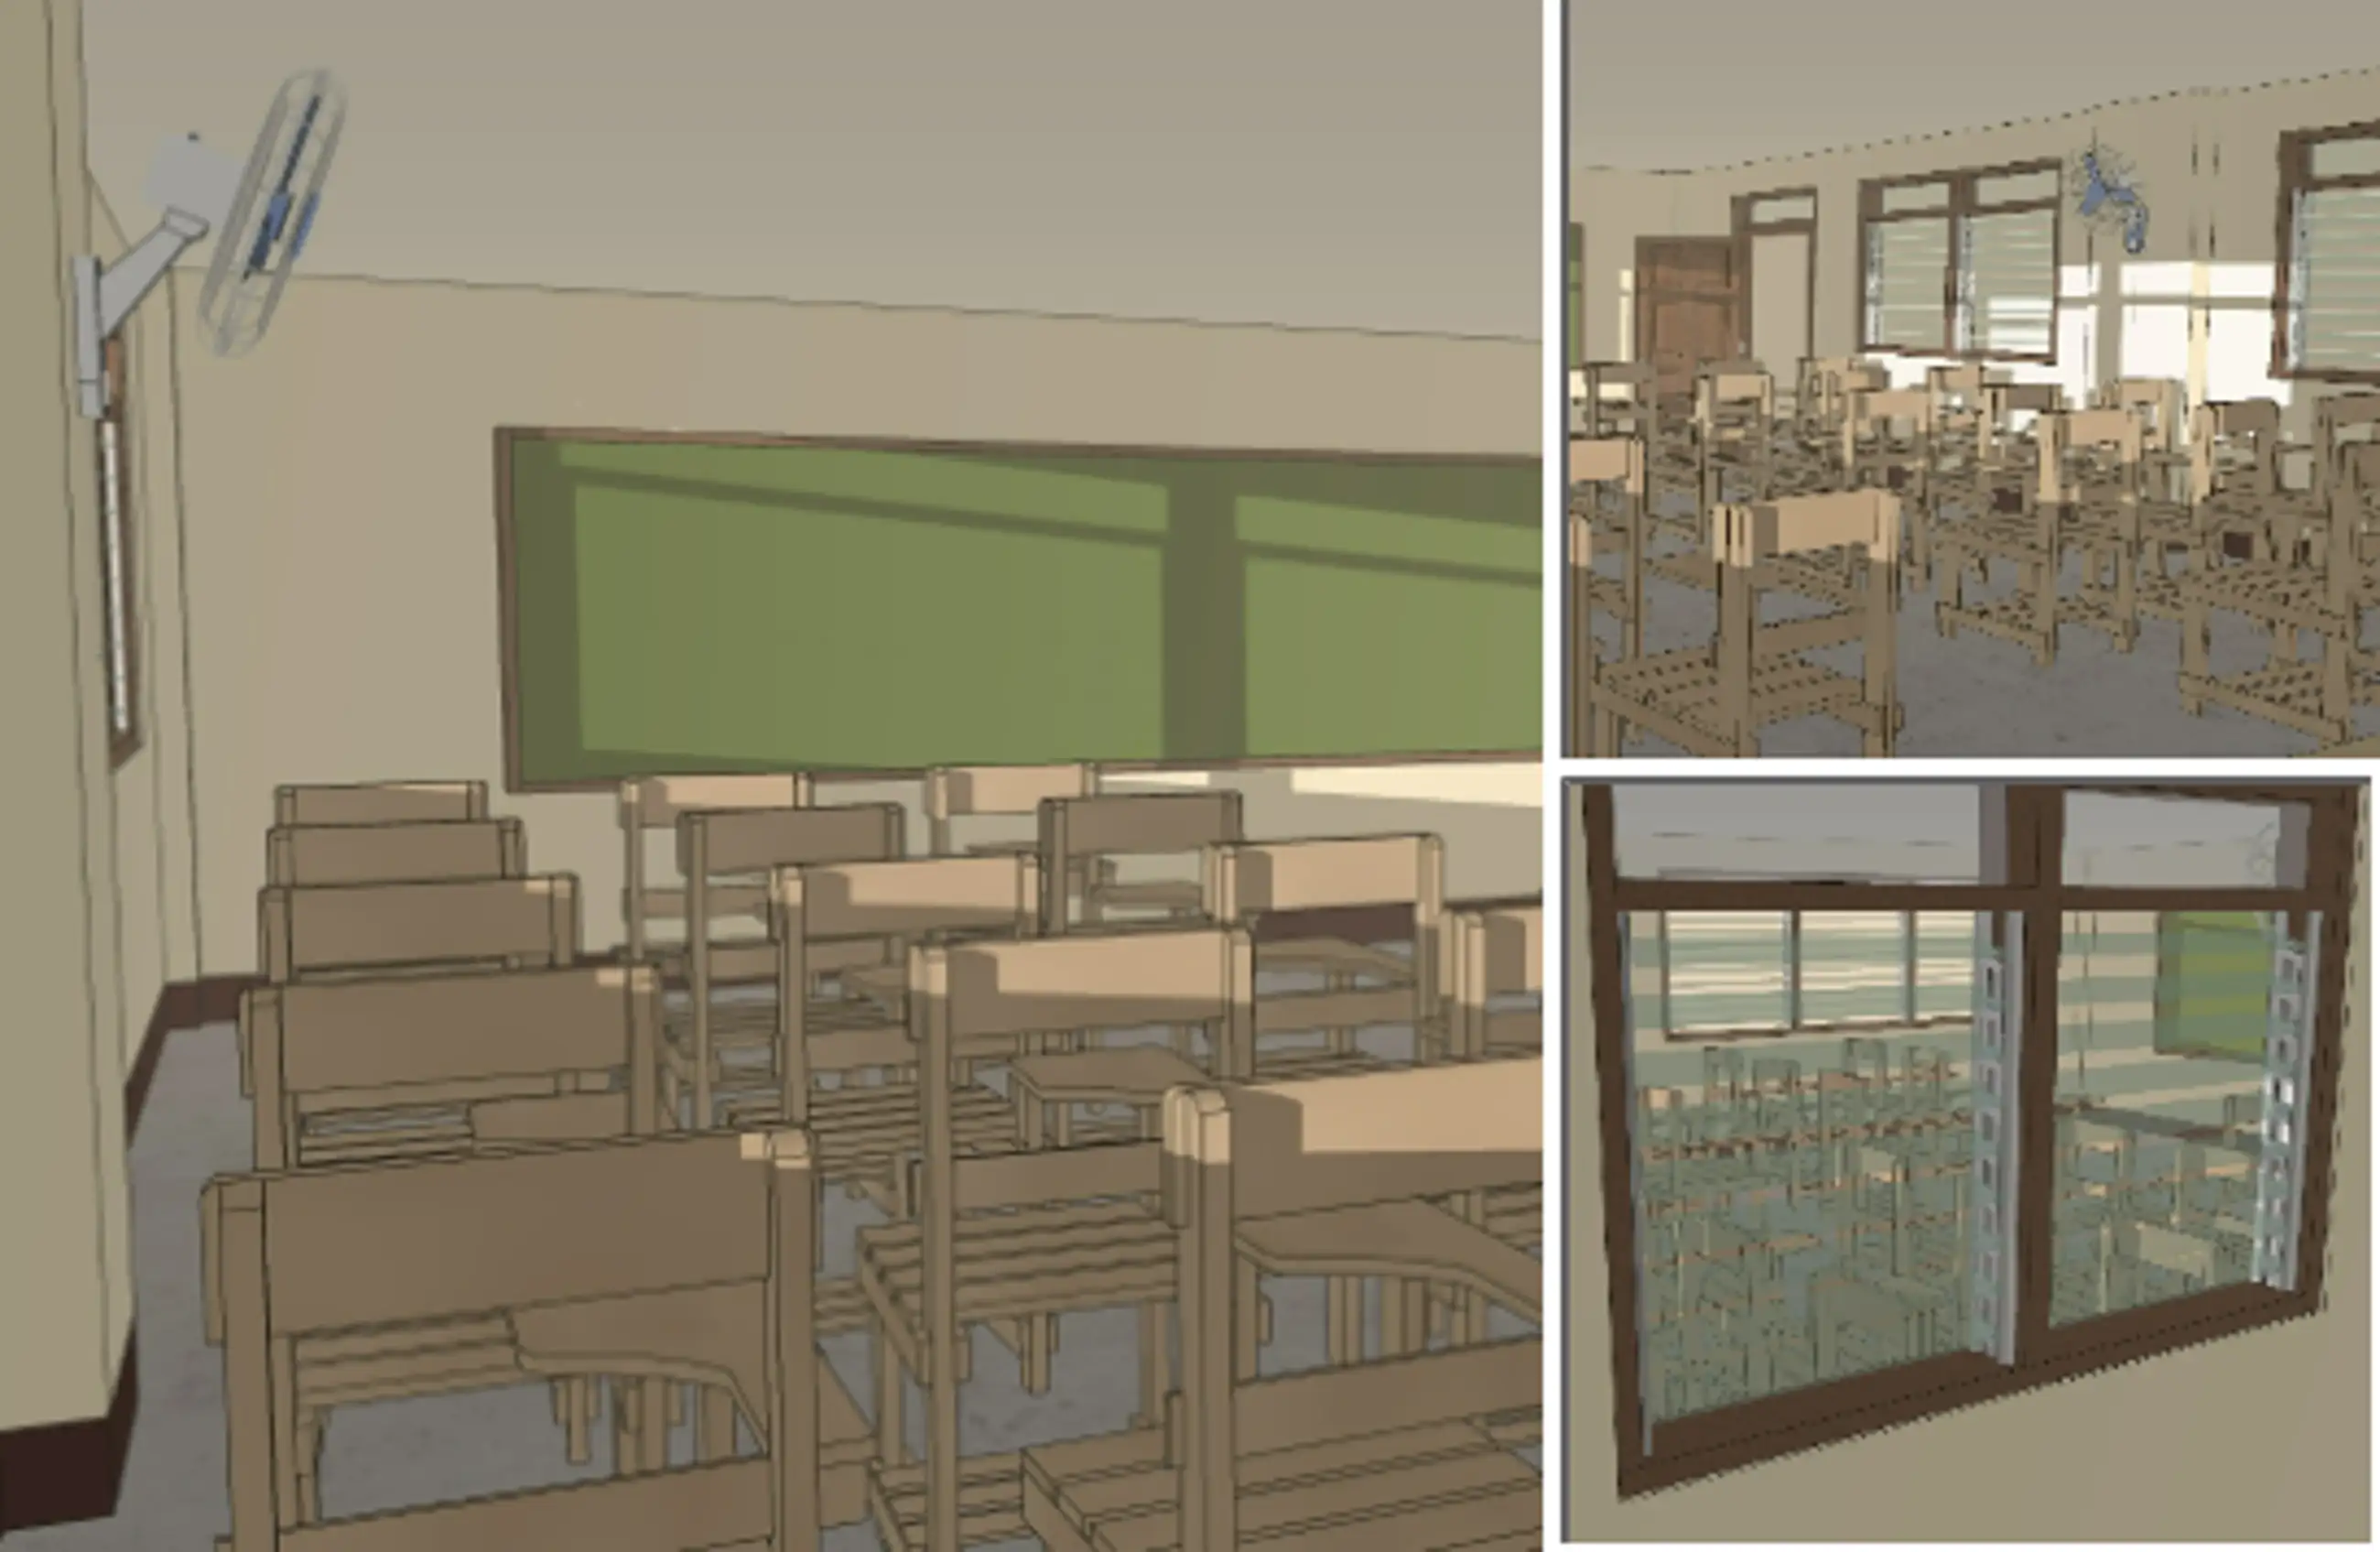 Free Public Classroom (Philippines)